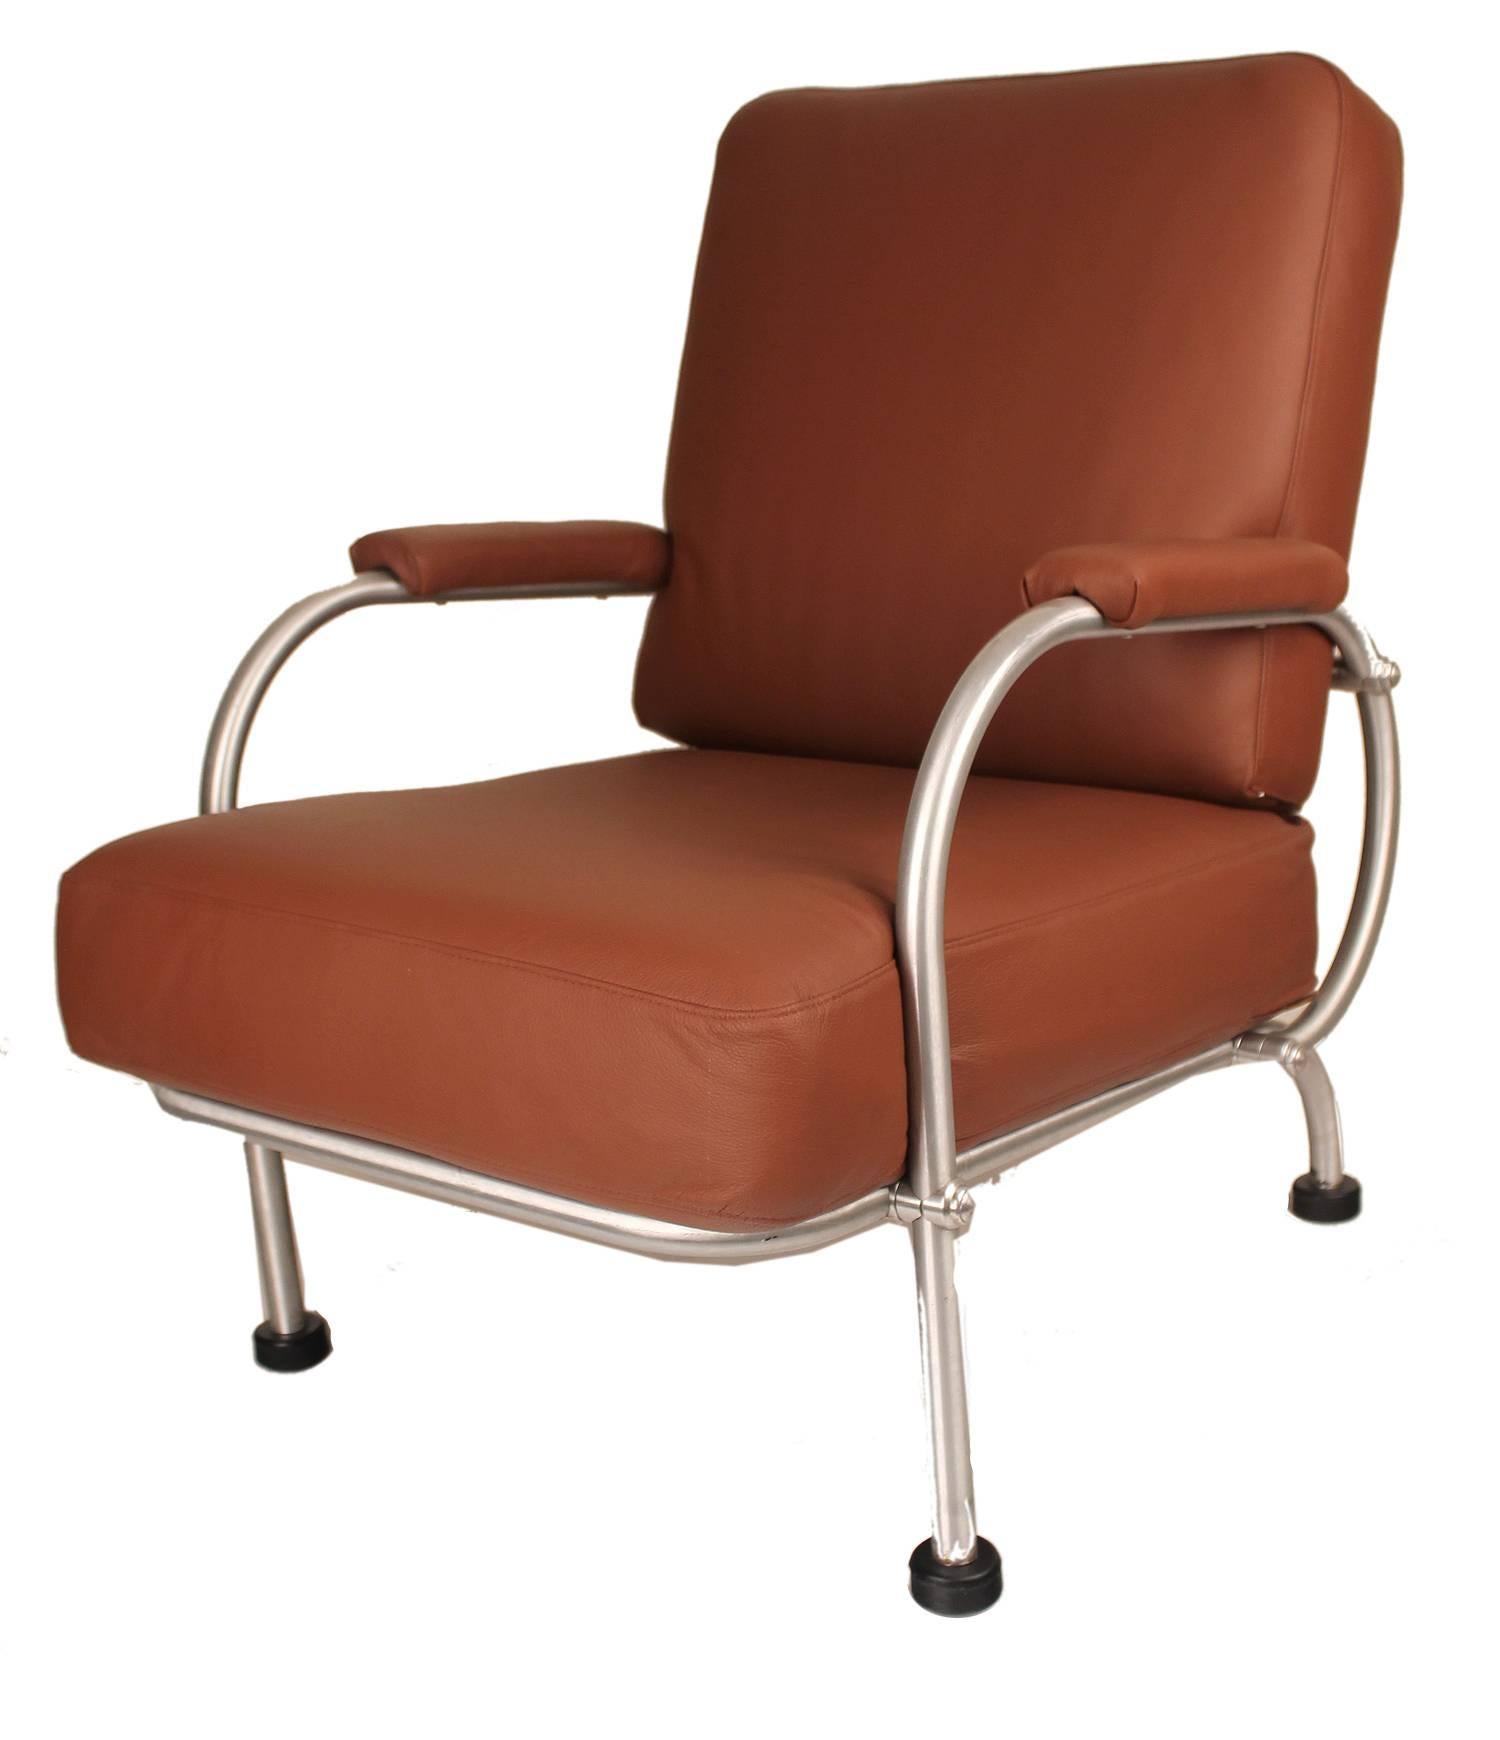  Pair of 1930s Art Deco Warren McArthur Lounge Chairs In Good Condition For Sale In Bremen, DE